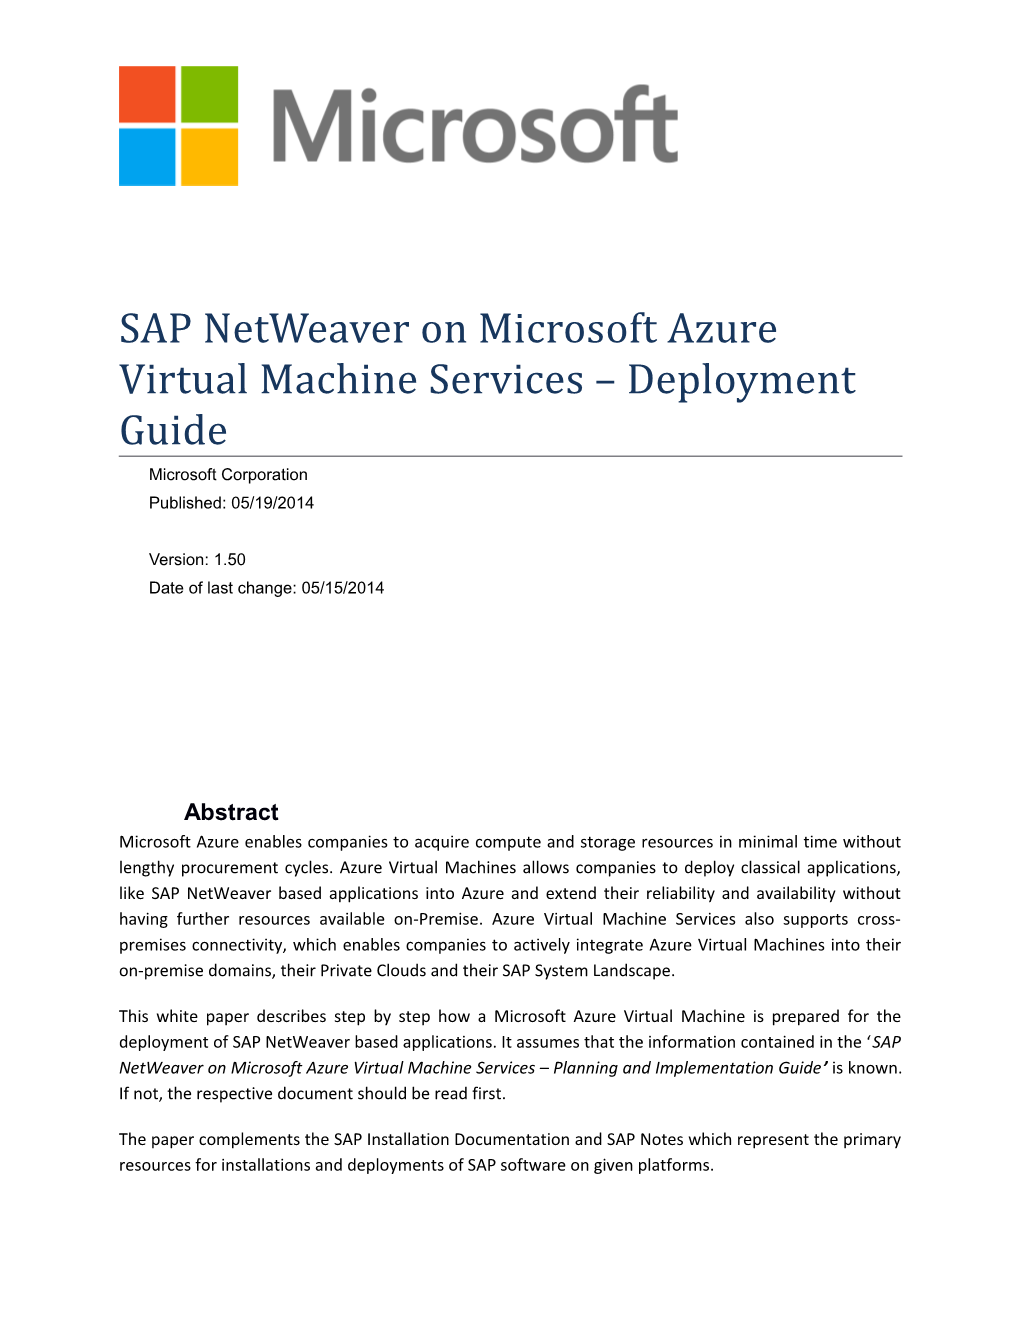 SAP Netweaver on Microsoft Azure Virtual Machine Services Deployment Guide